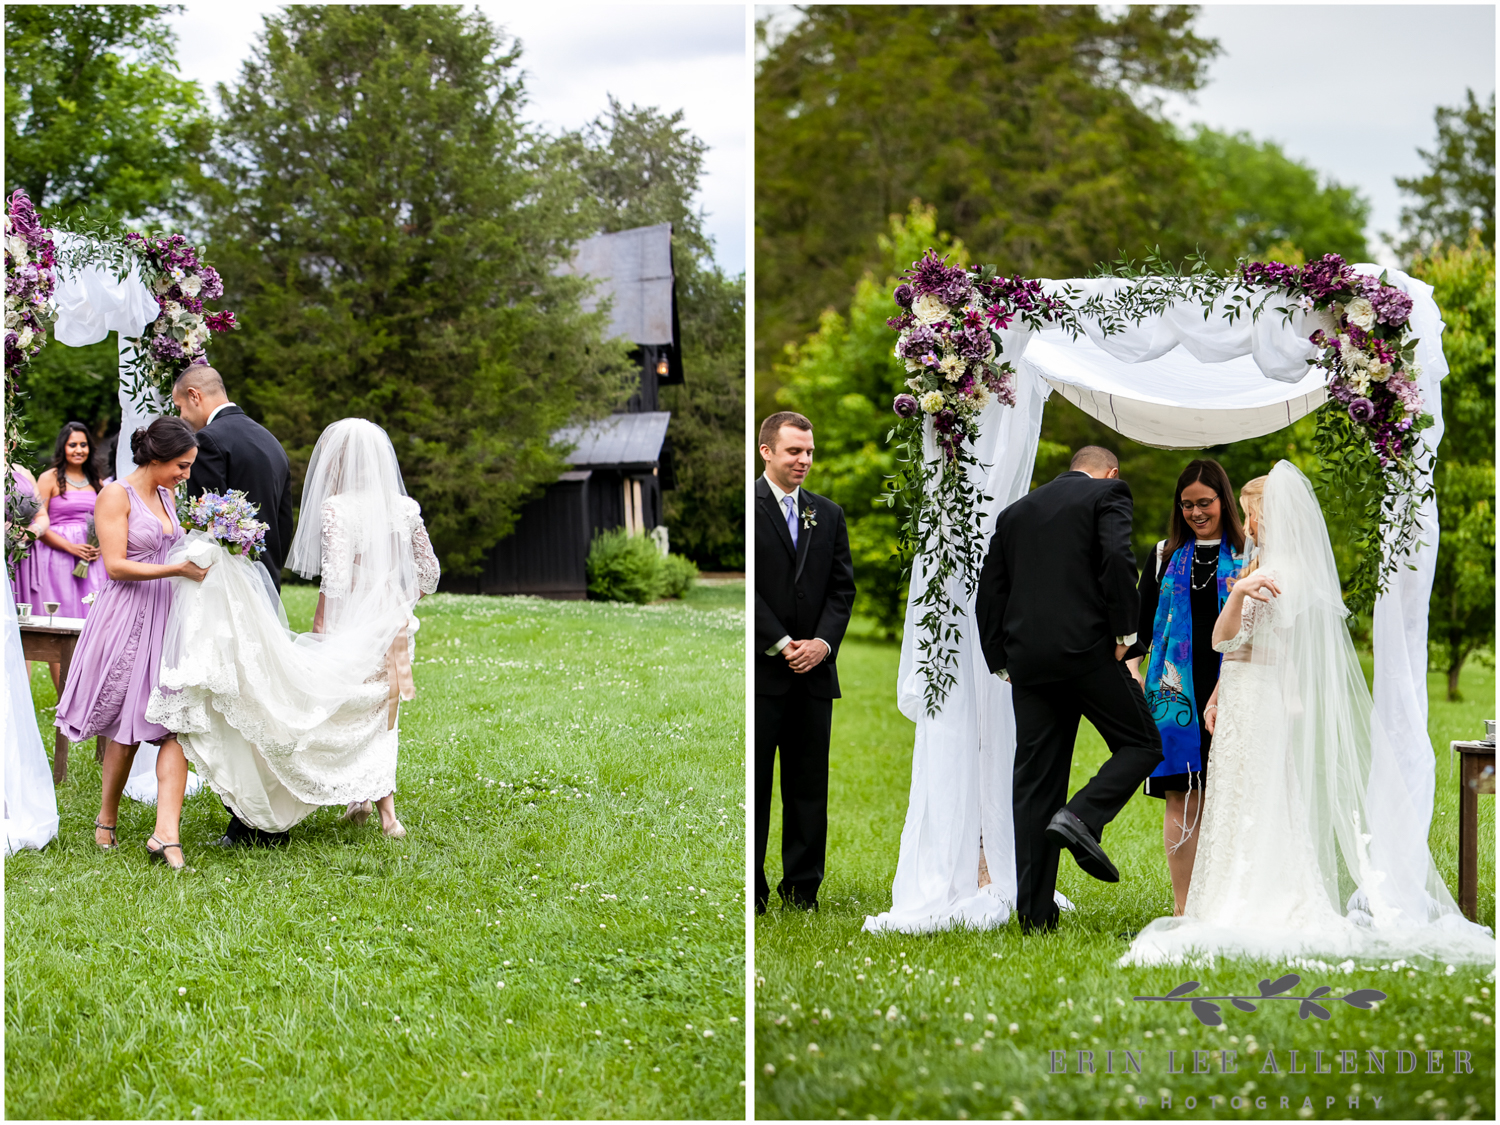 Outdoor_Jewish_Wedding_Ceremony_Chuppah